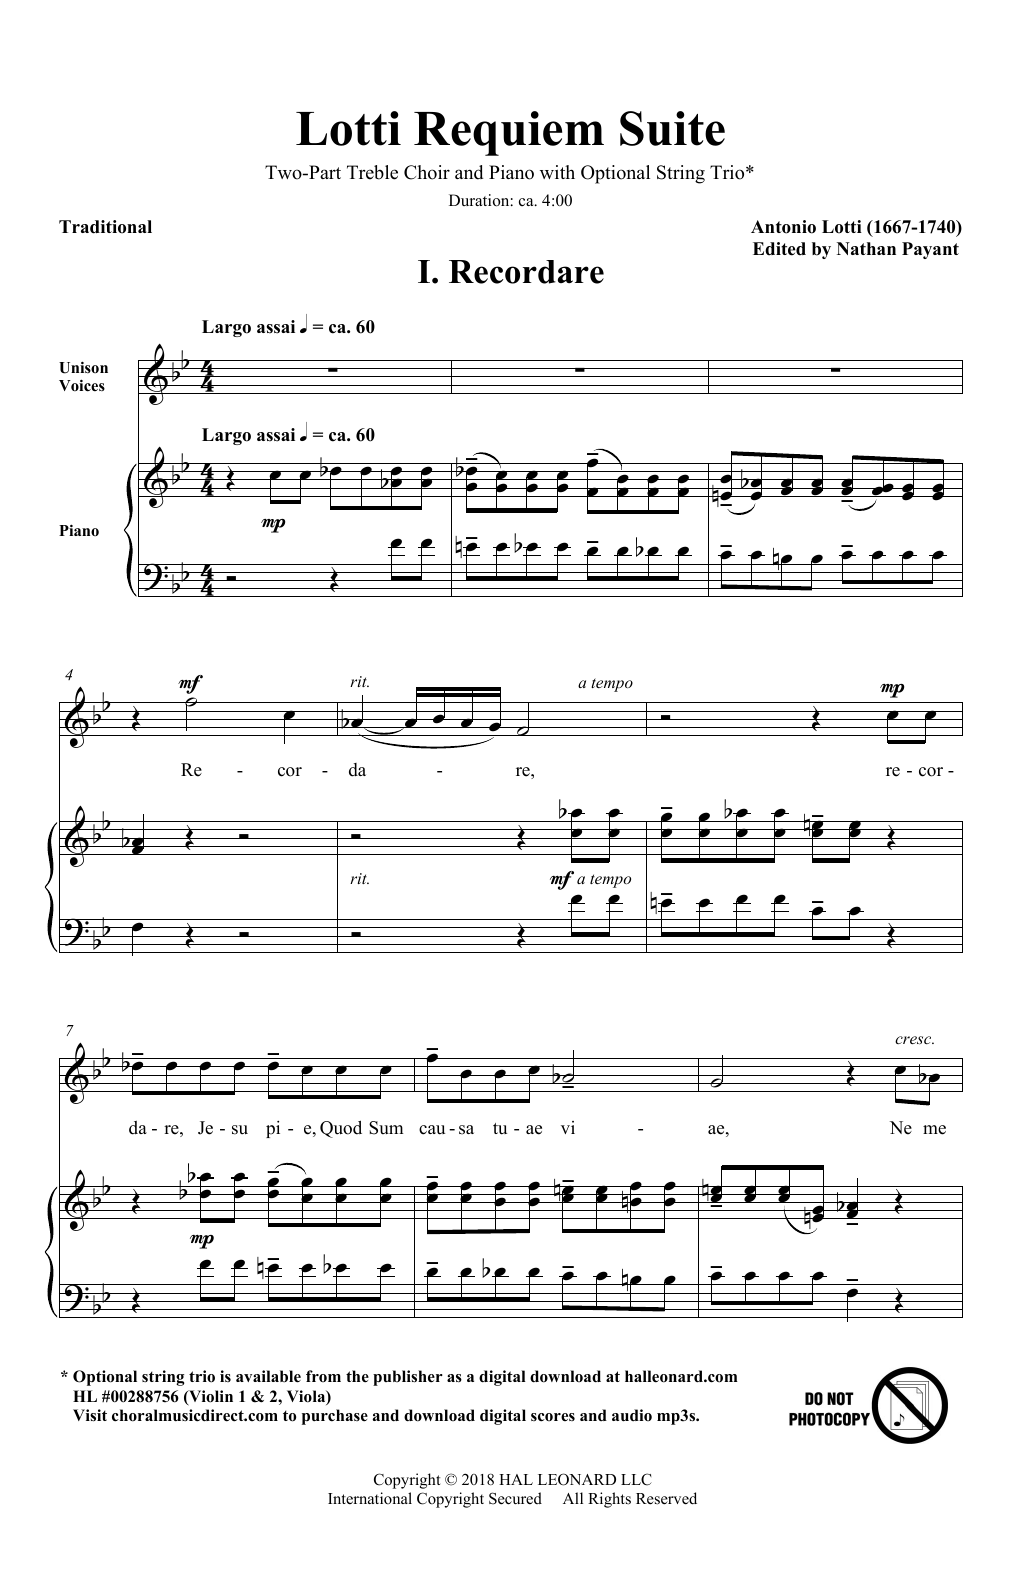 Antonio Lotti Lotti Requiem Suite (arr. Natahn Payant) sheet music notes and chords arranged for 2-Part Choir